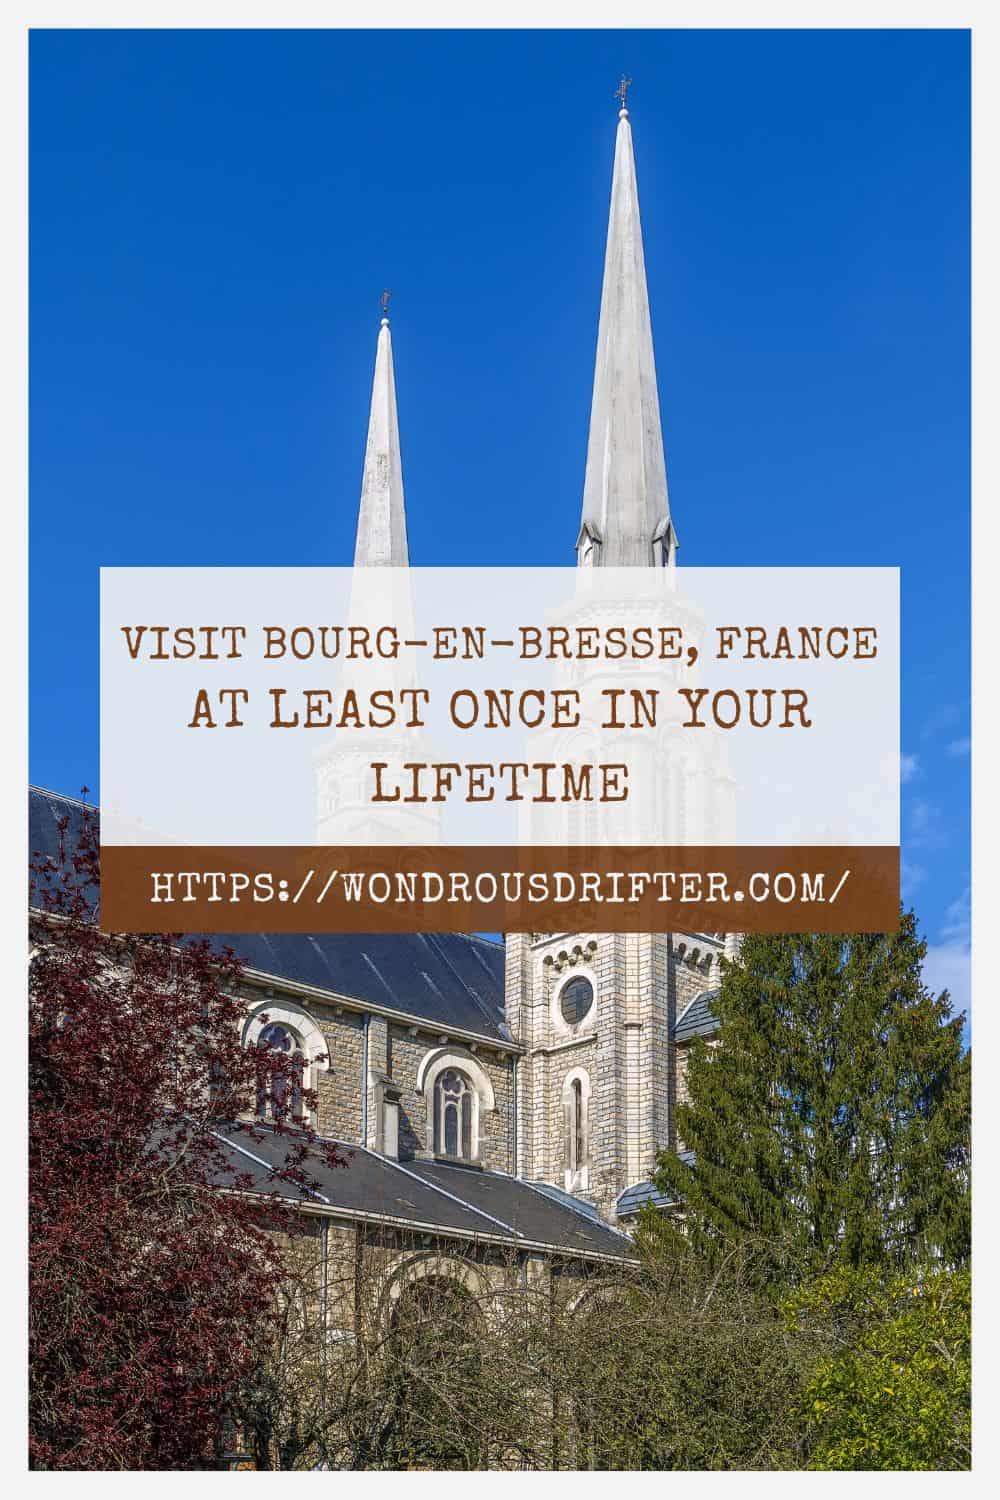 Visit Bourg-en-Bresse France at least once in your lifetime